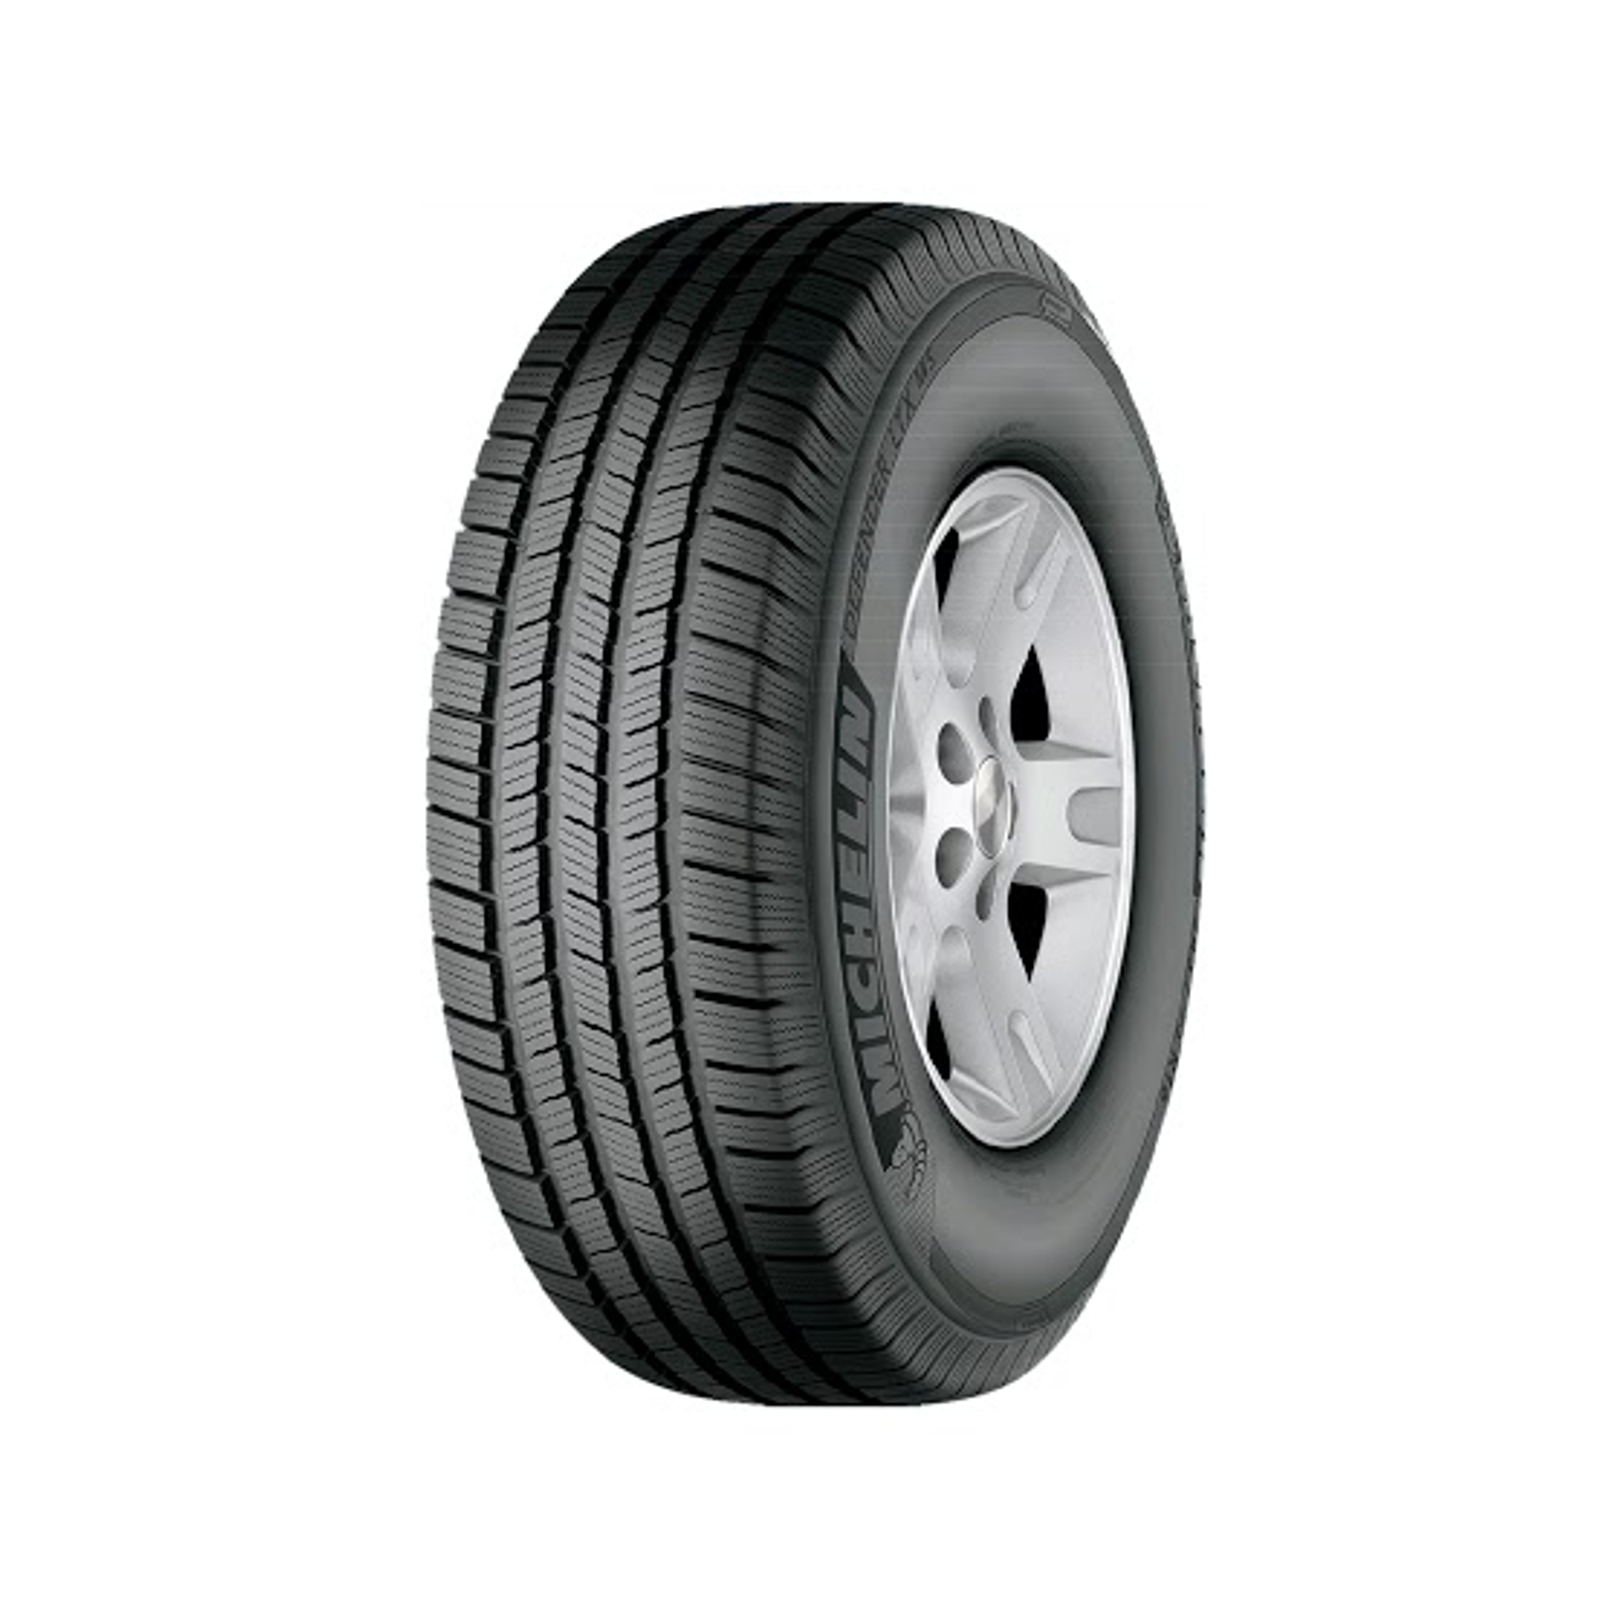 Michelin Defender LTX M/S 245/55R19 103H AllSeason Tire